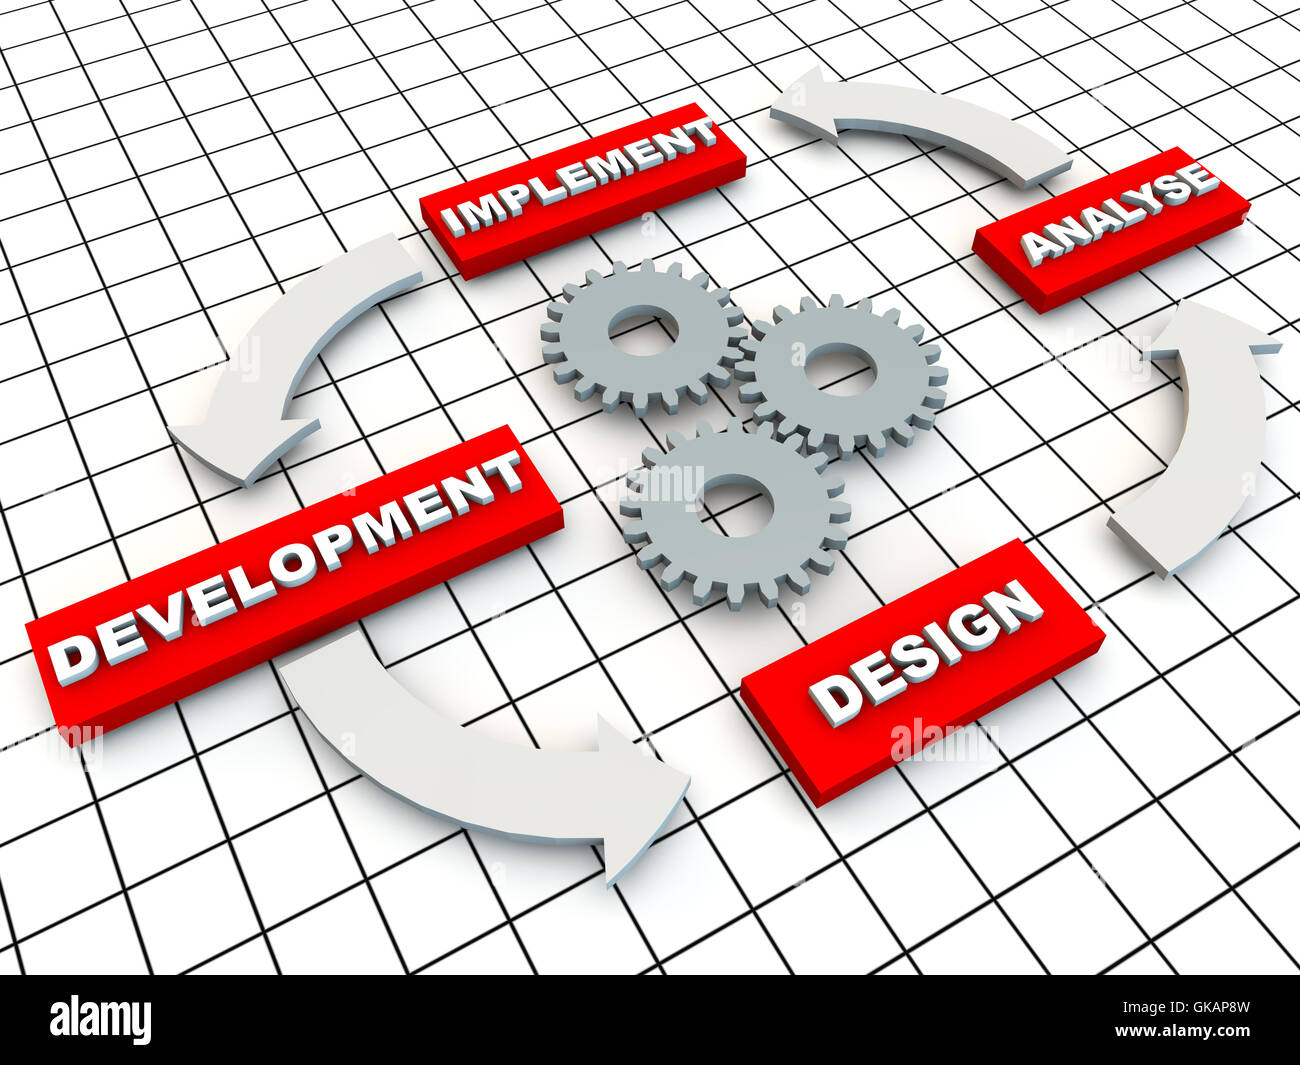 implement development software Stock Photo